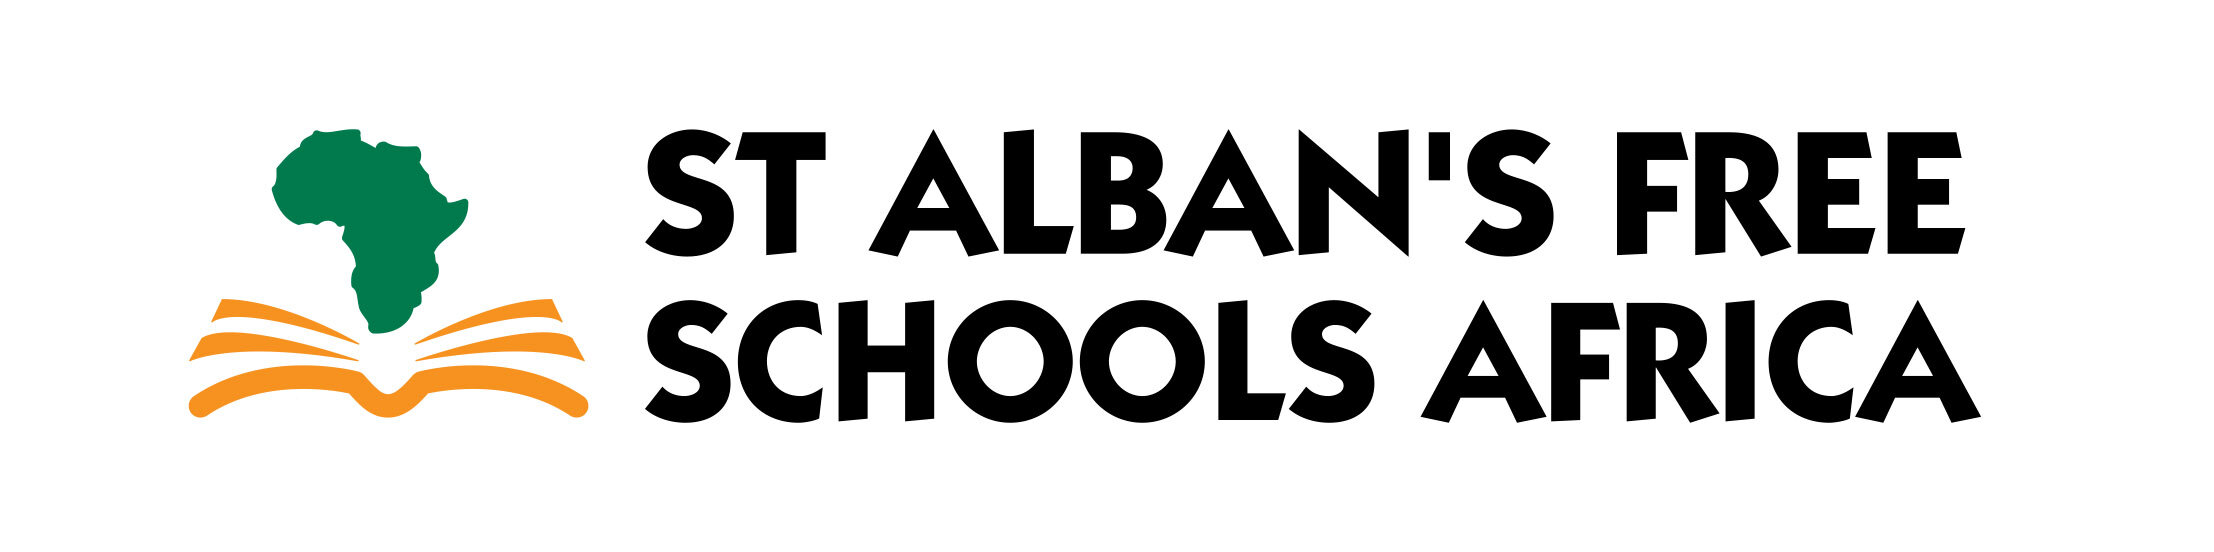 St Albans Free Schools Africa